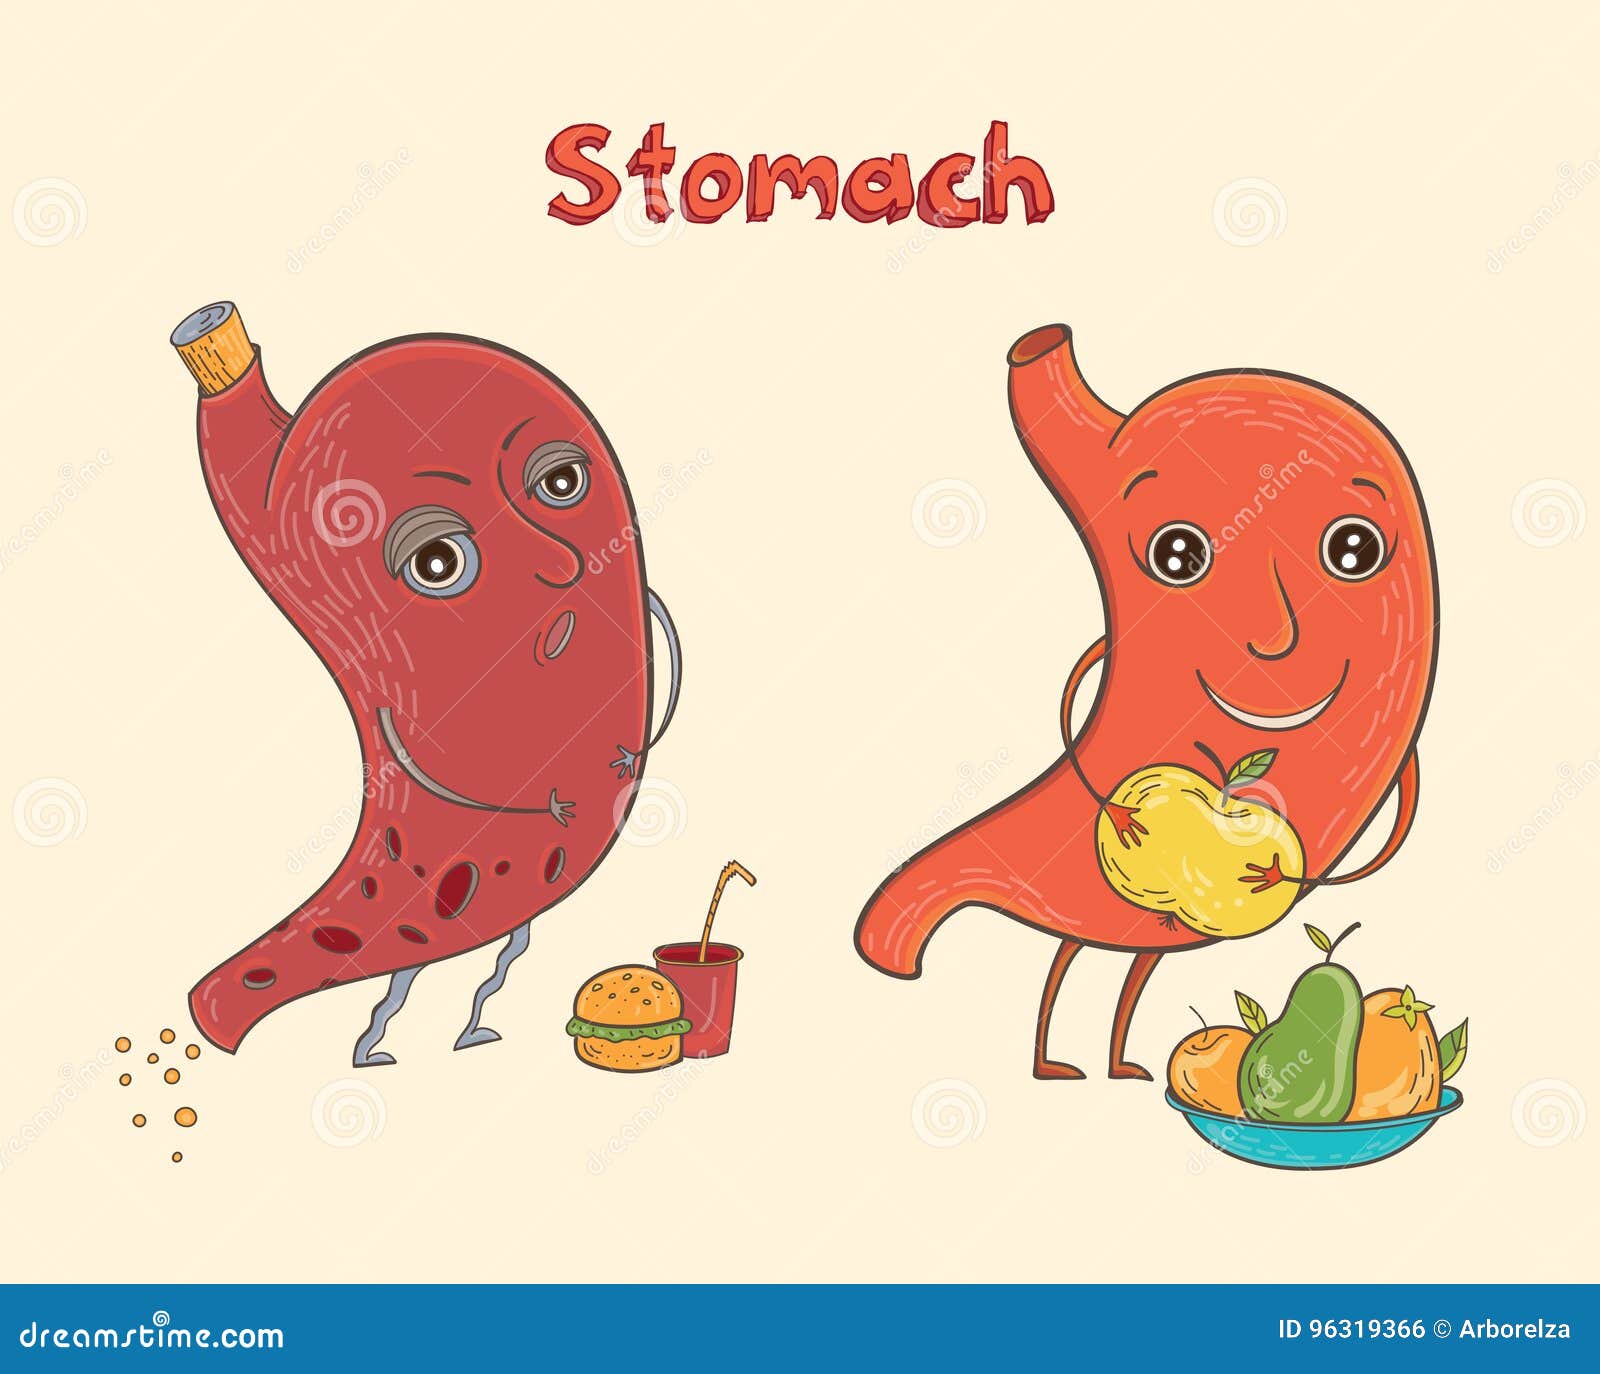 Cartoon Human Stomach Character Stock Vector - Illustration of